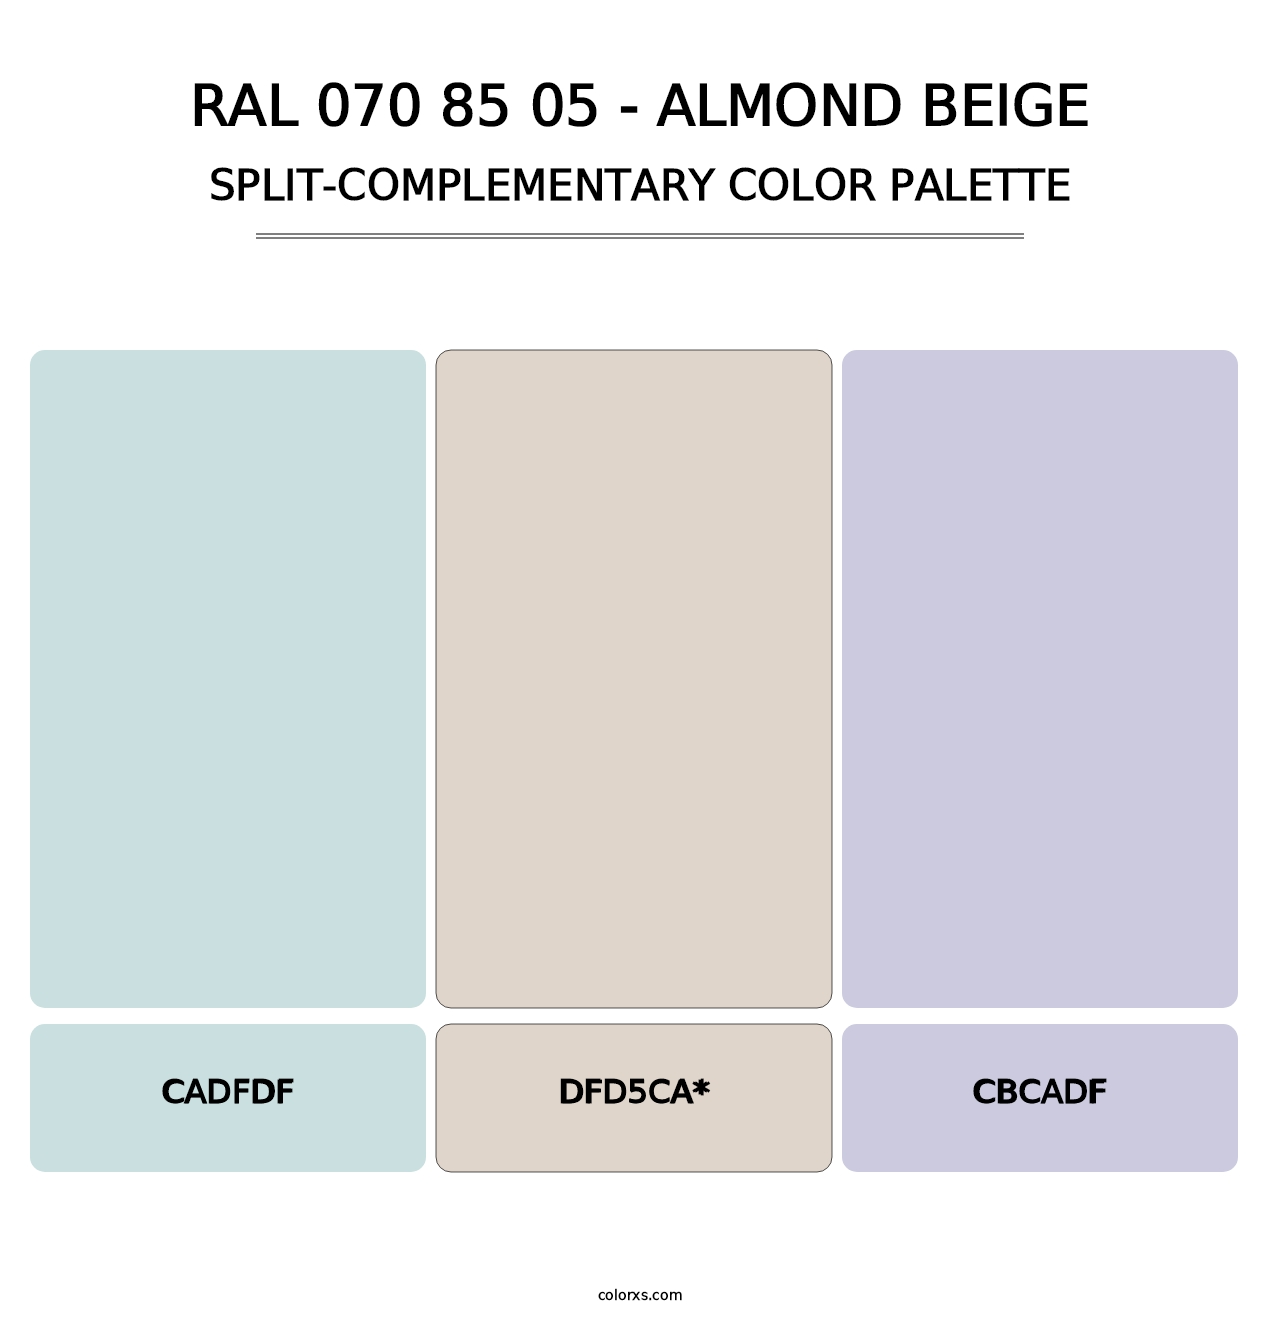 RAL 070 85 05 - Almond Beige - Split-Complementary Color Palette